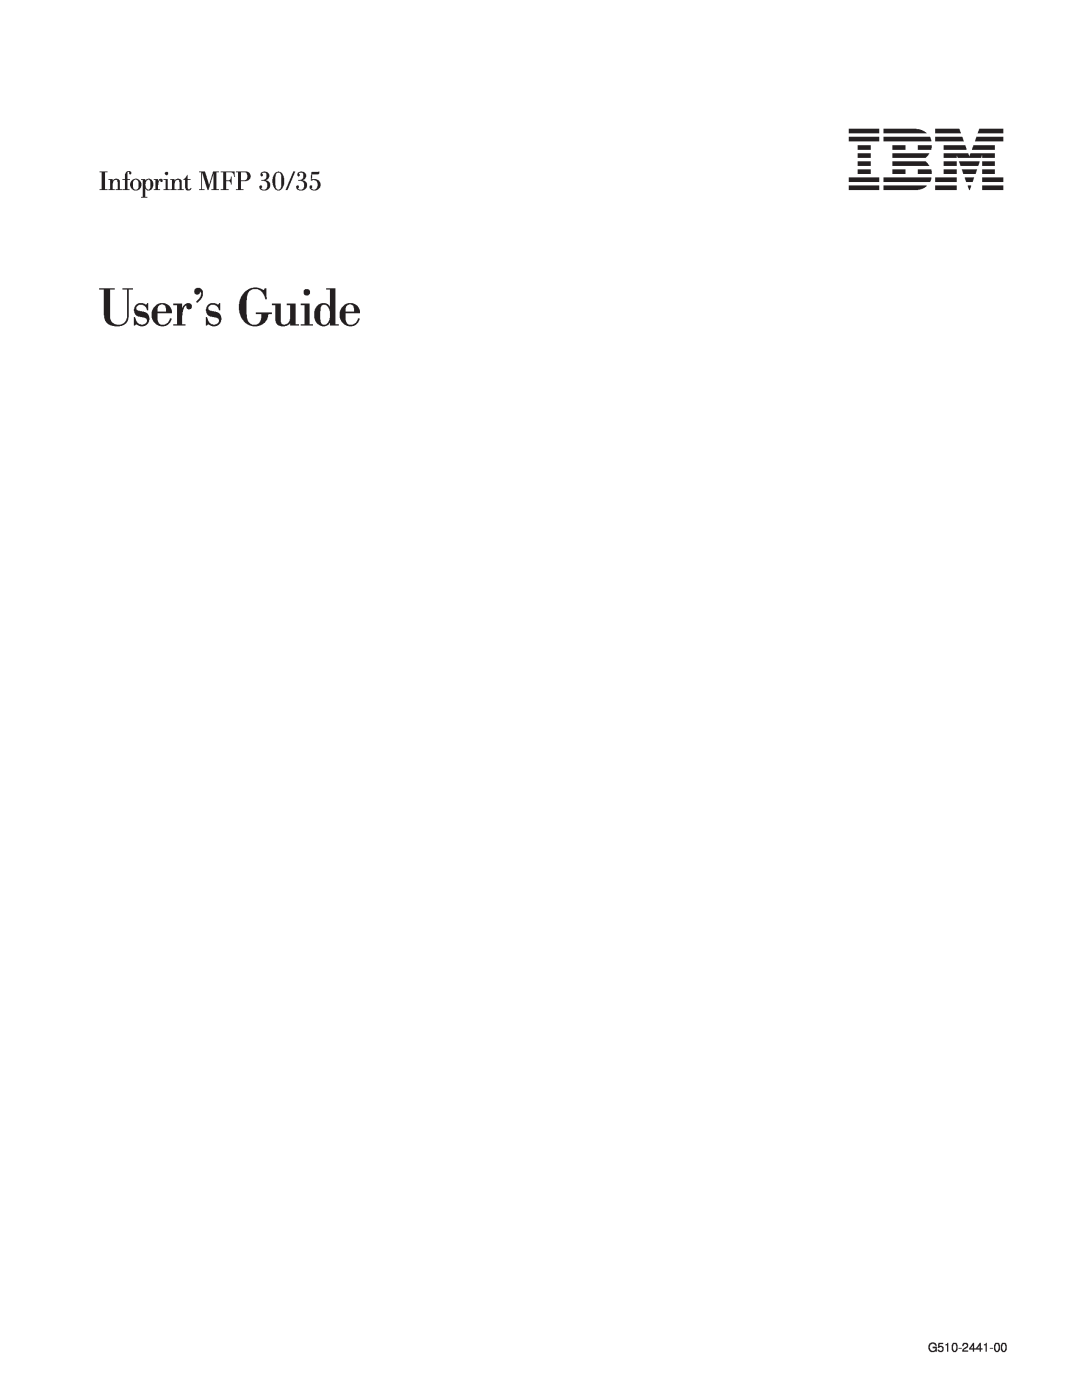 IBM MFP 35 manual Users Guide, Infoprint MFP 30/35, G510-2441-00 